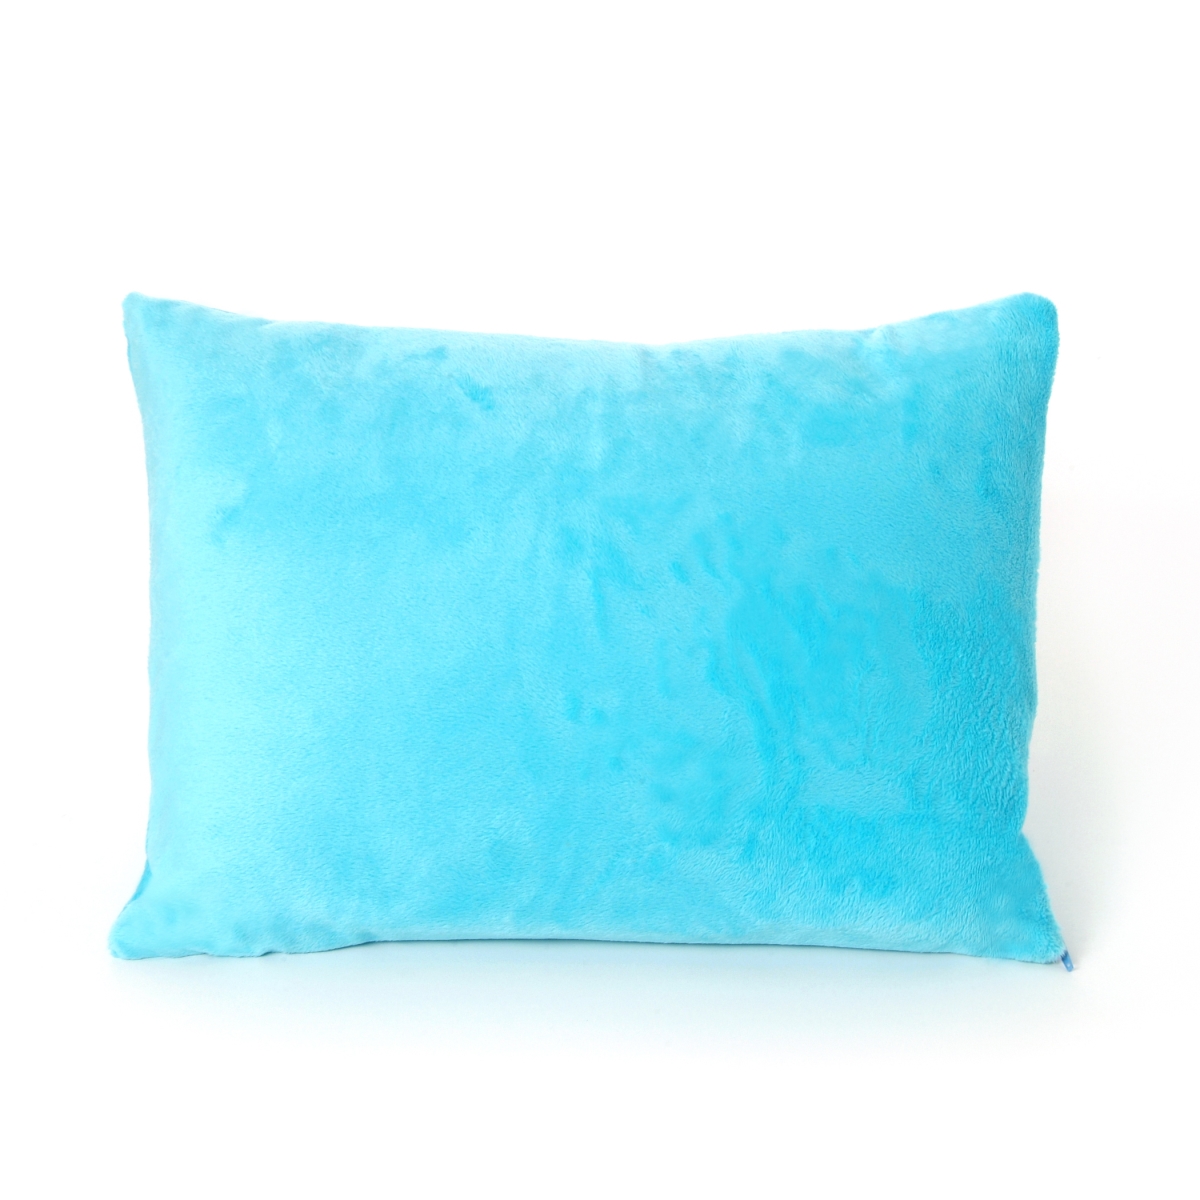 My First Mattress Pl-mfptb-06 Memory Foam Toddler Pillow With Free Pillow Case, Soft Blue